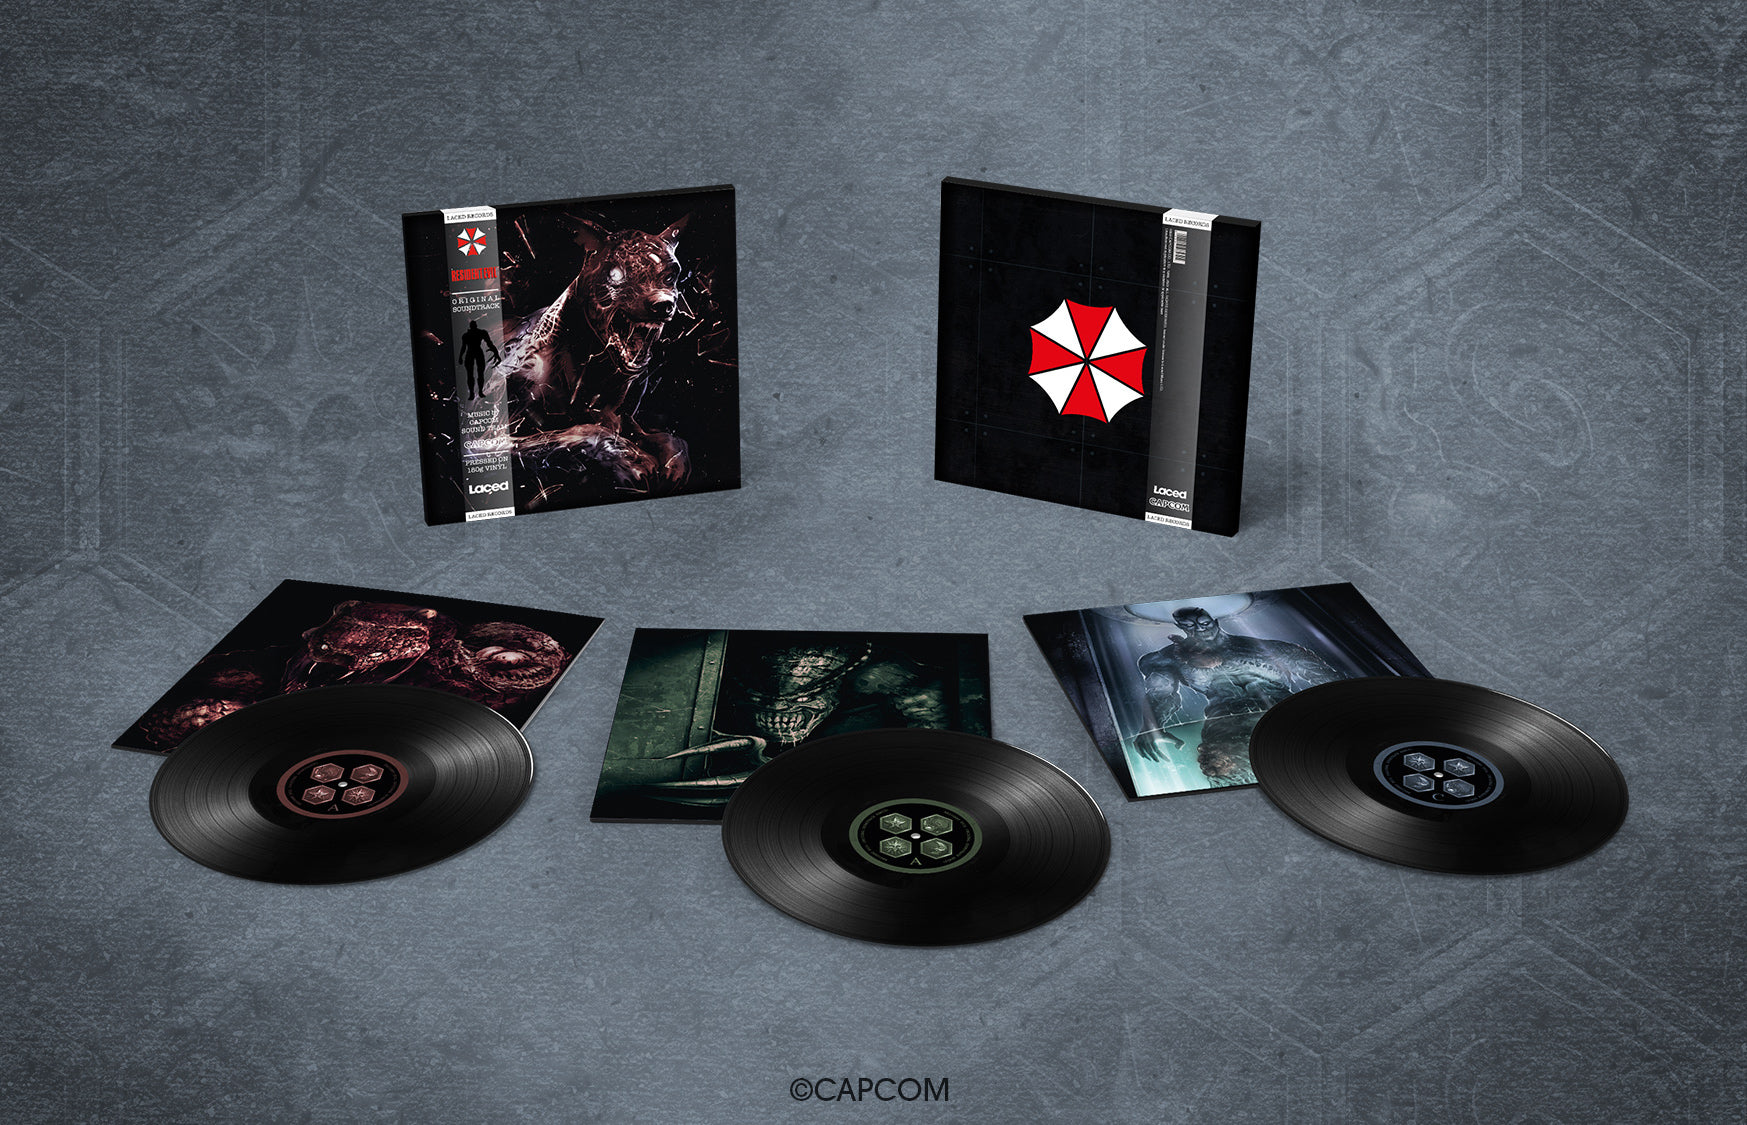 Resident Evil (1996 Original Soundtrack + Original Soundtrack Remix) (Deluxe Triple Vinyl) by Laced Records